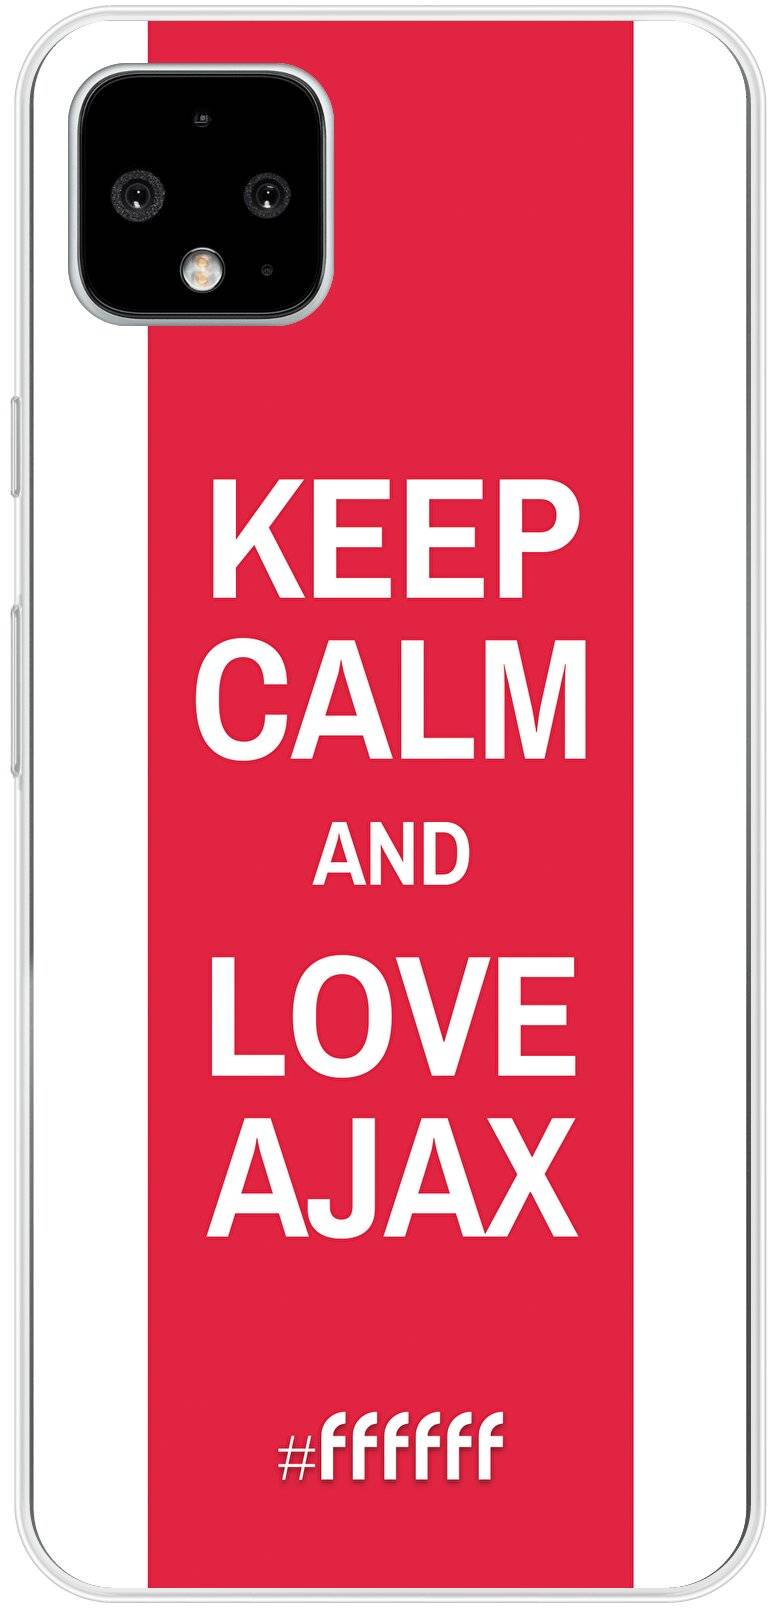 AFC Ajax Keep Calm Pixel 4 XL